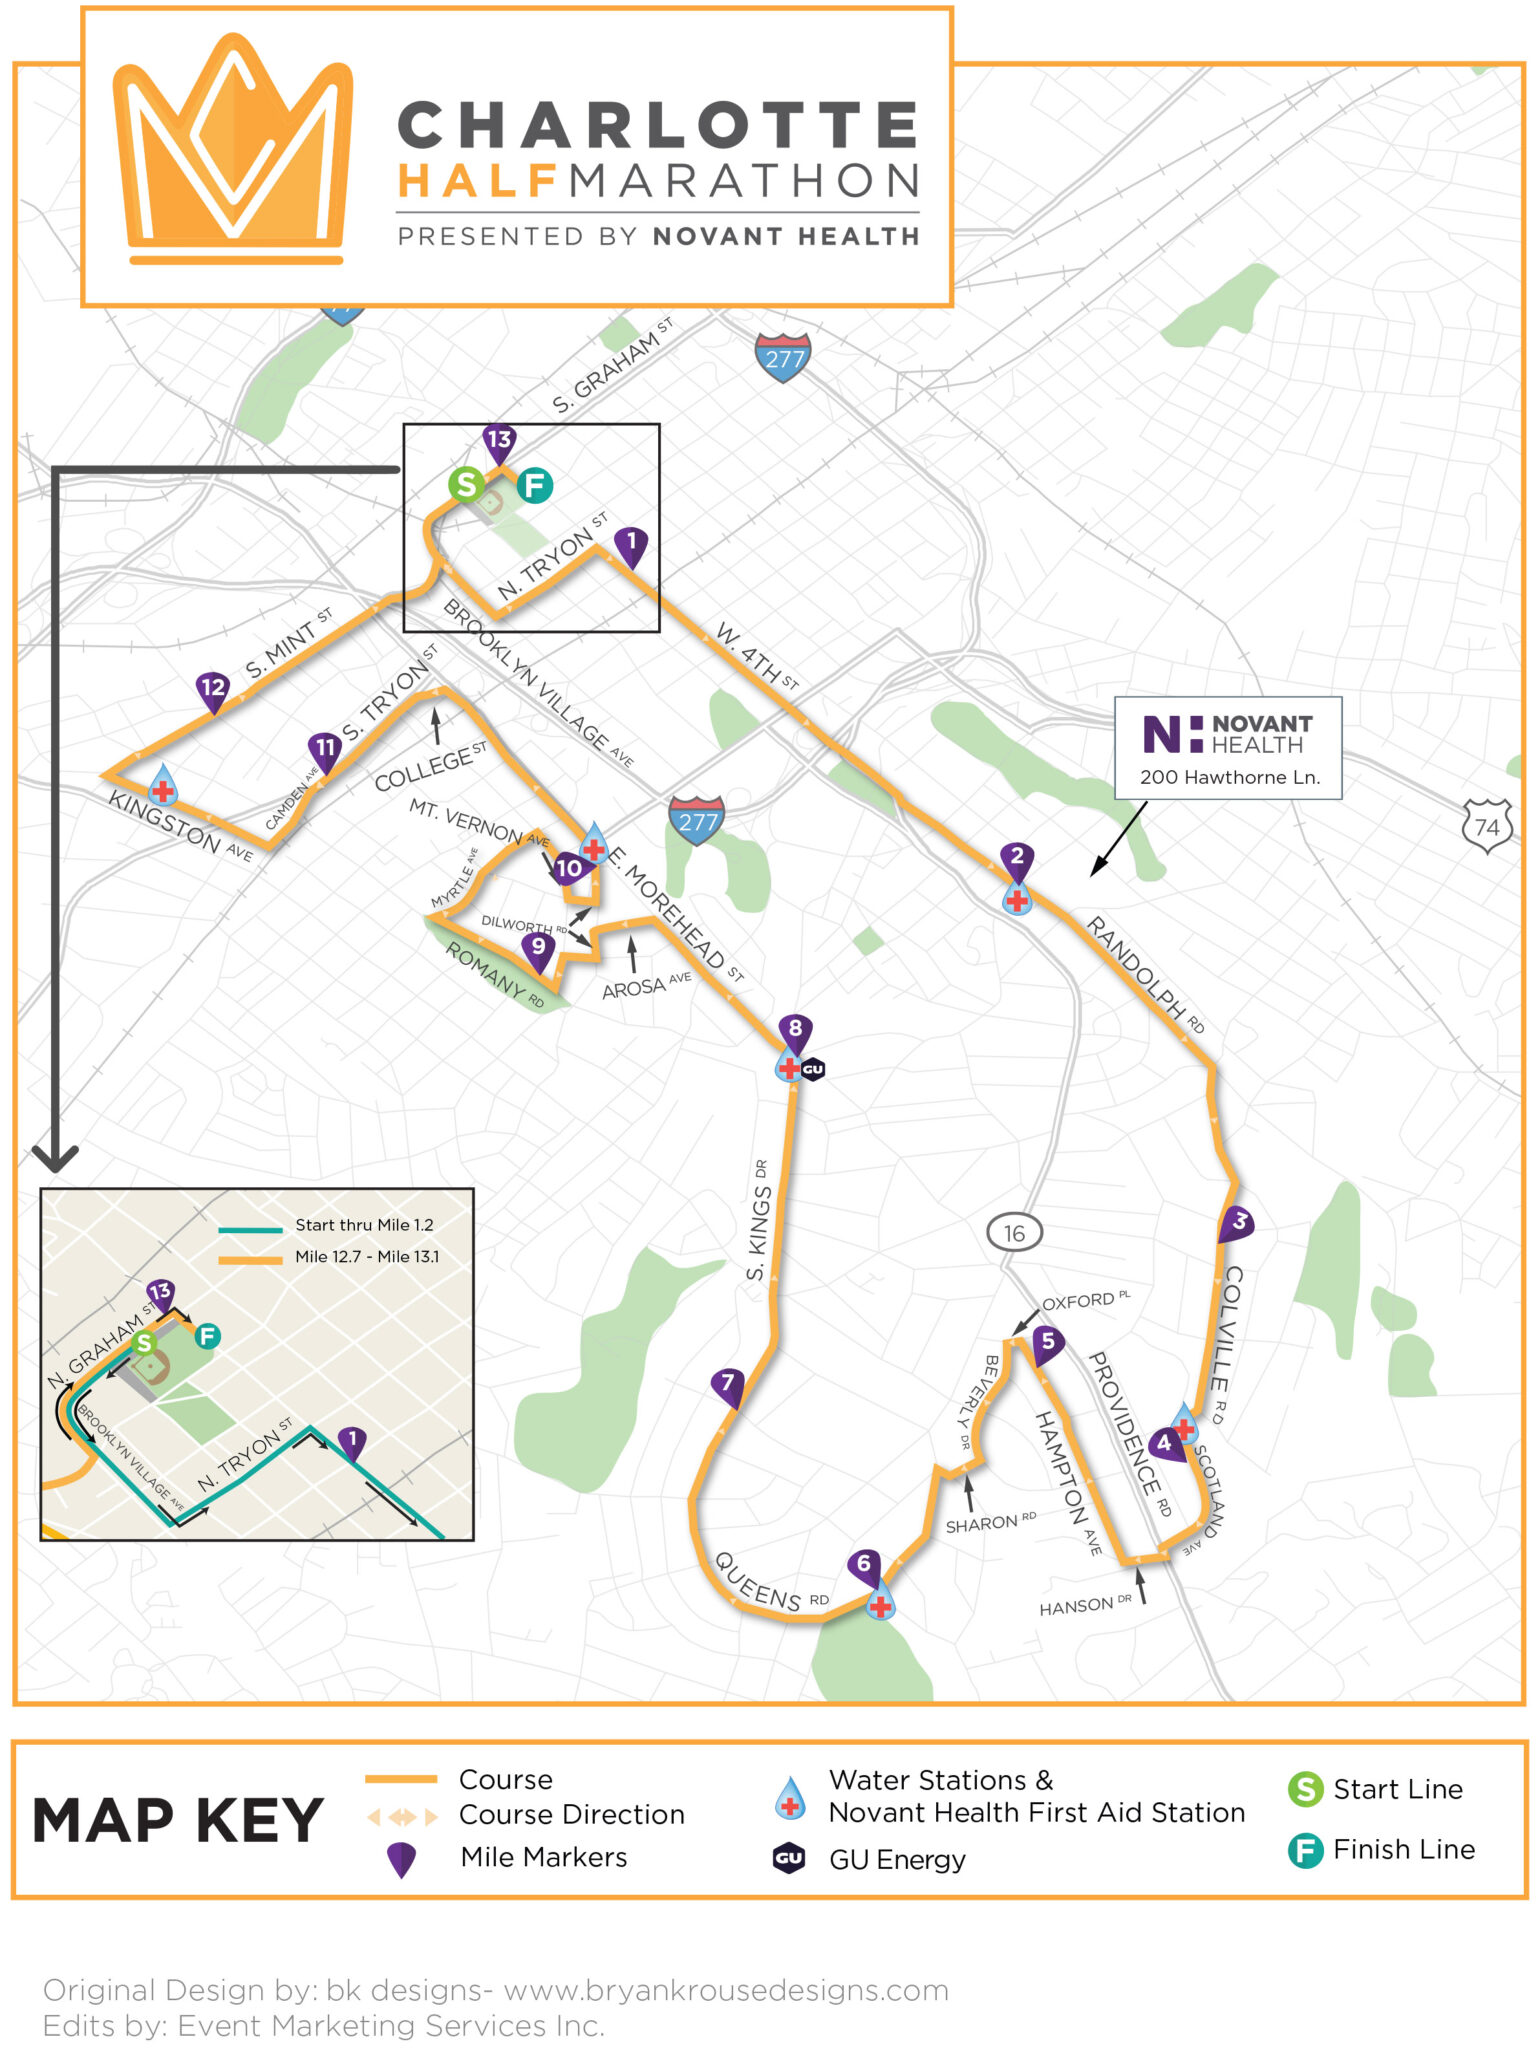 Races Charlotte Marathon, Half Marathon, Relay & 5K